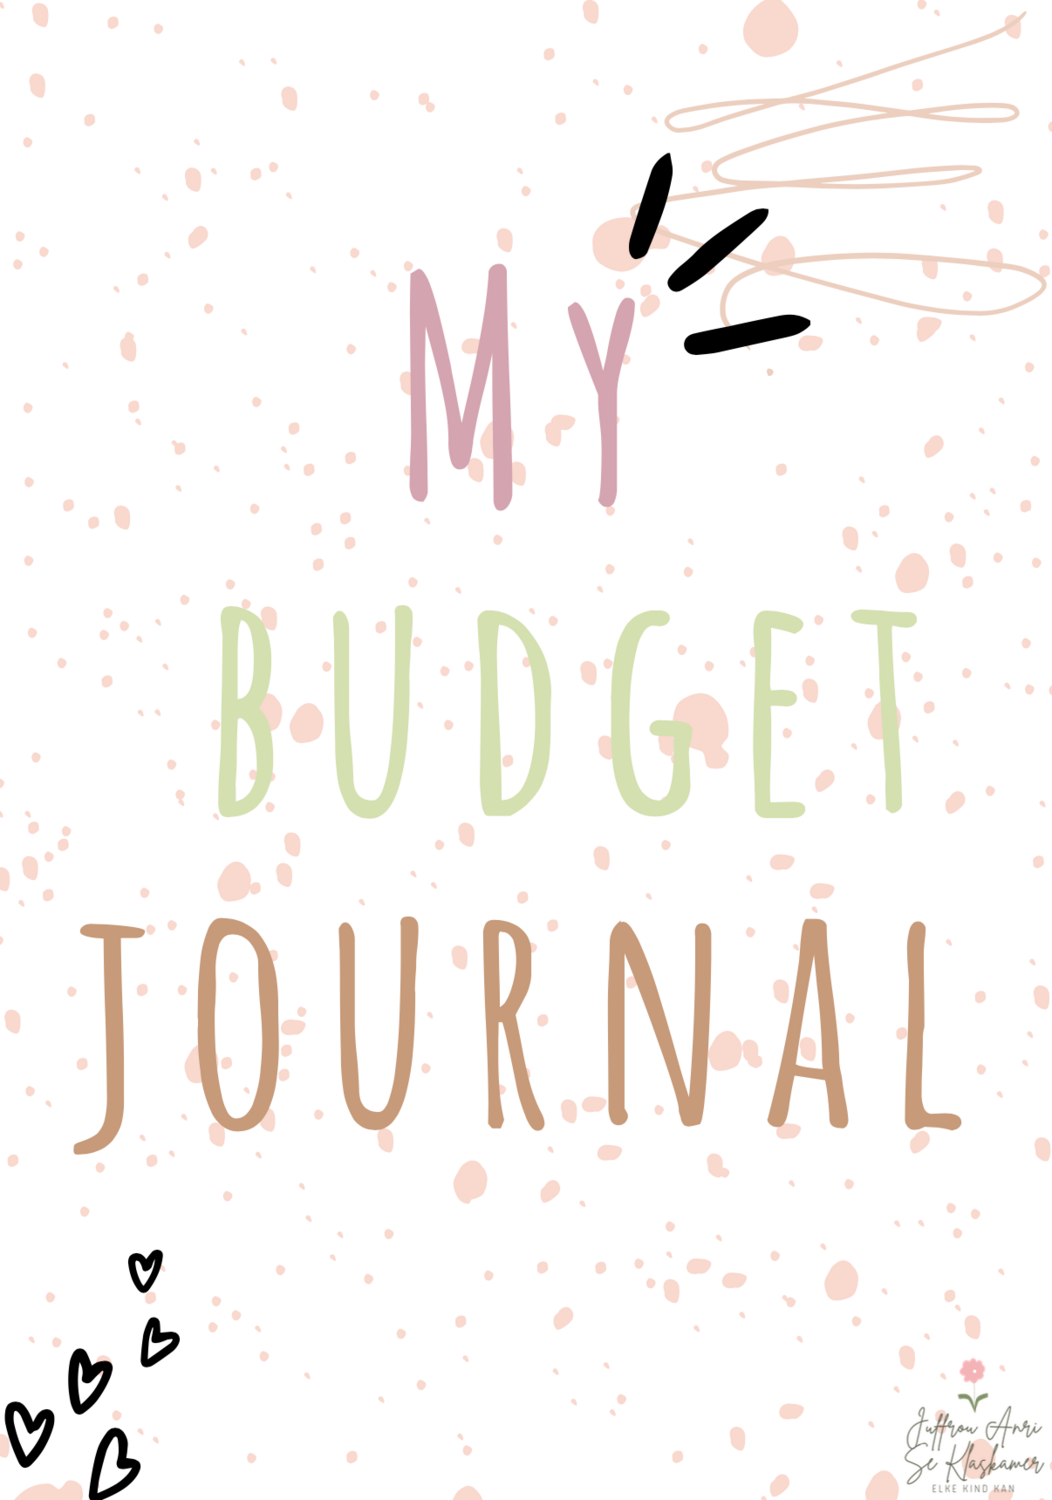 Original Budget Journal